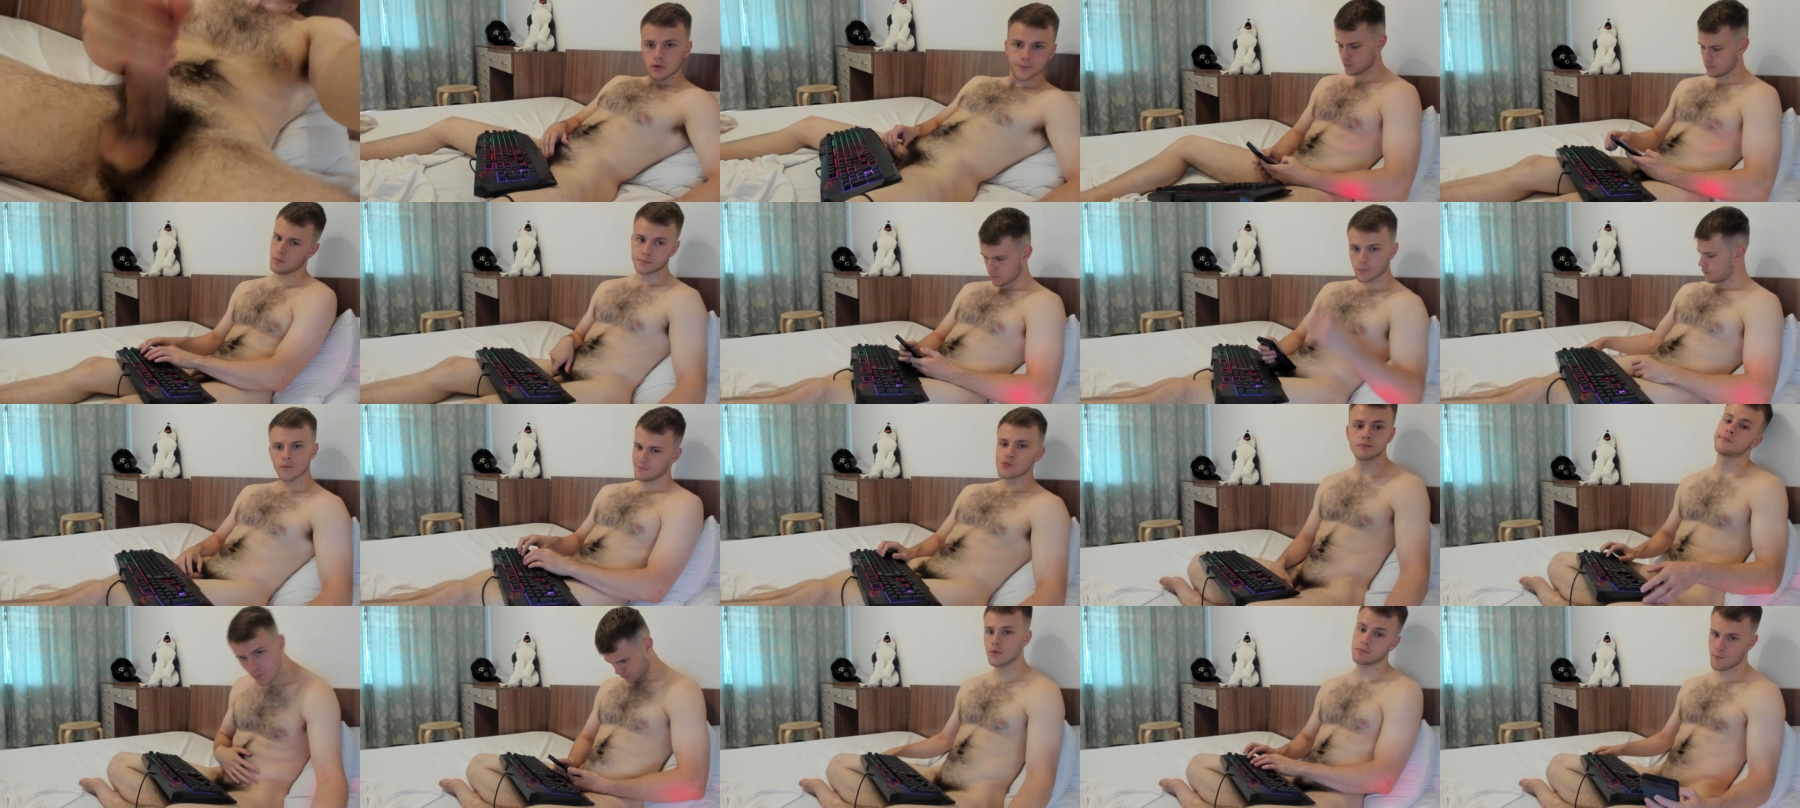 Jeffrey_Grand  14-07-2021 Male Topless